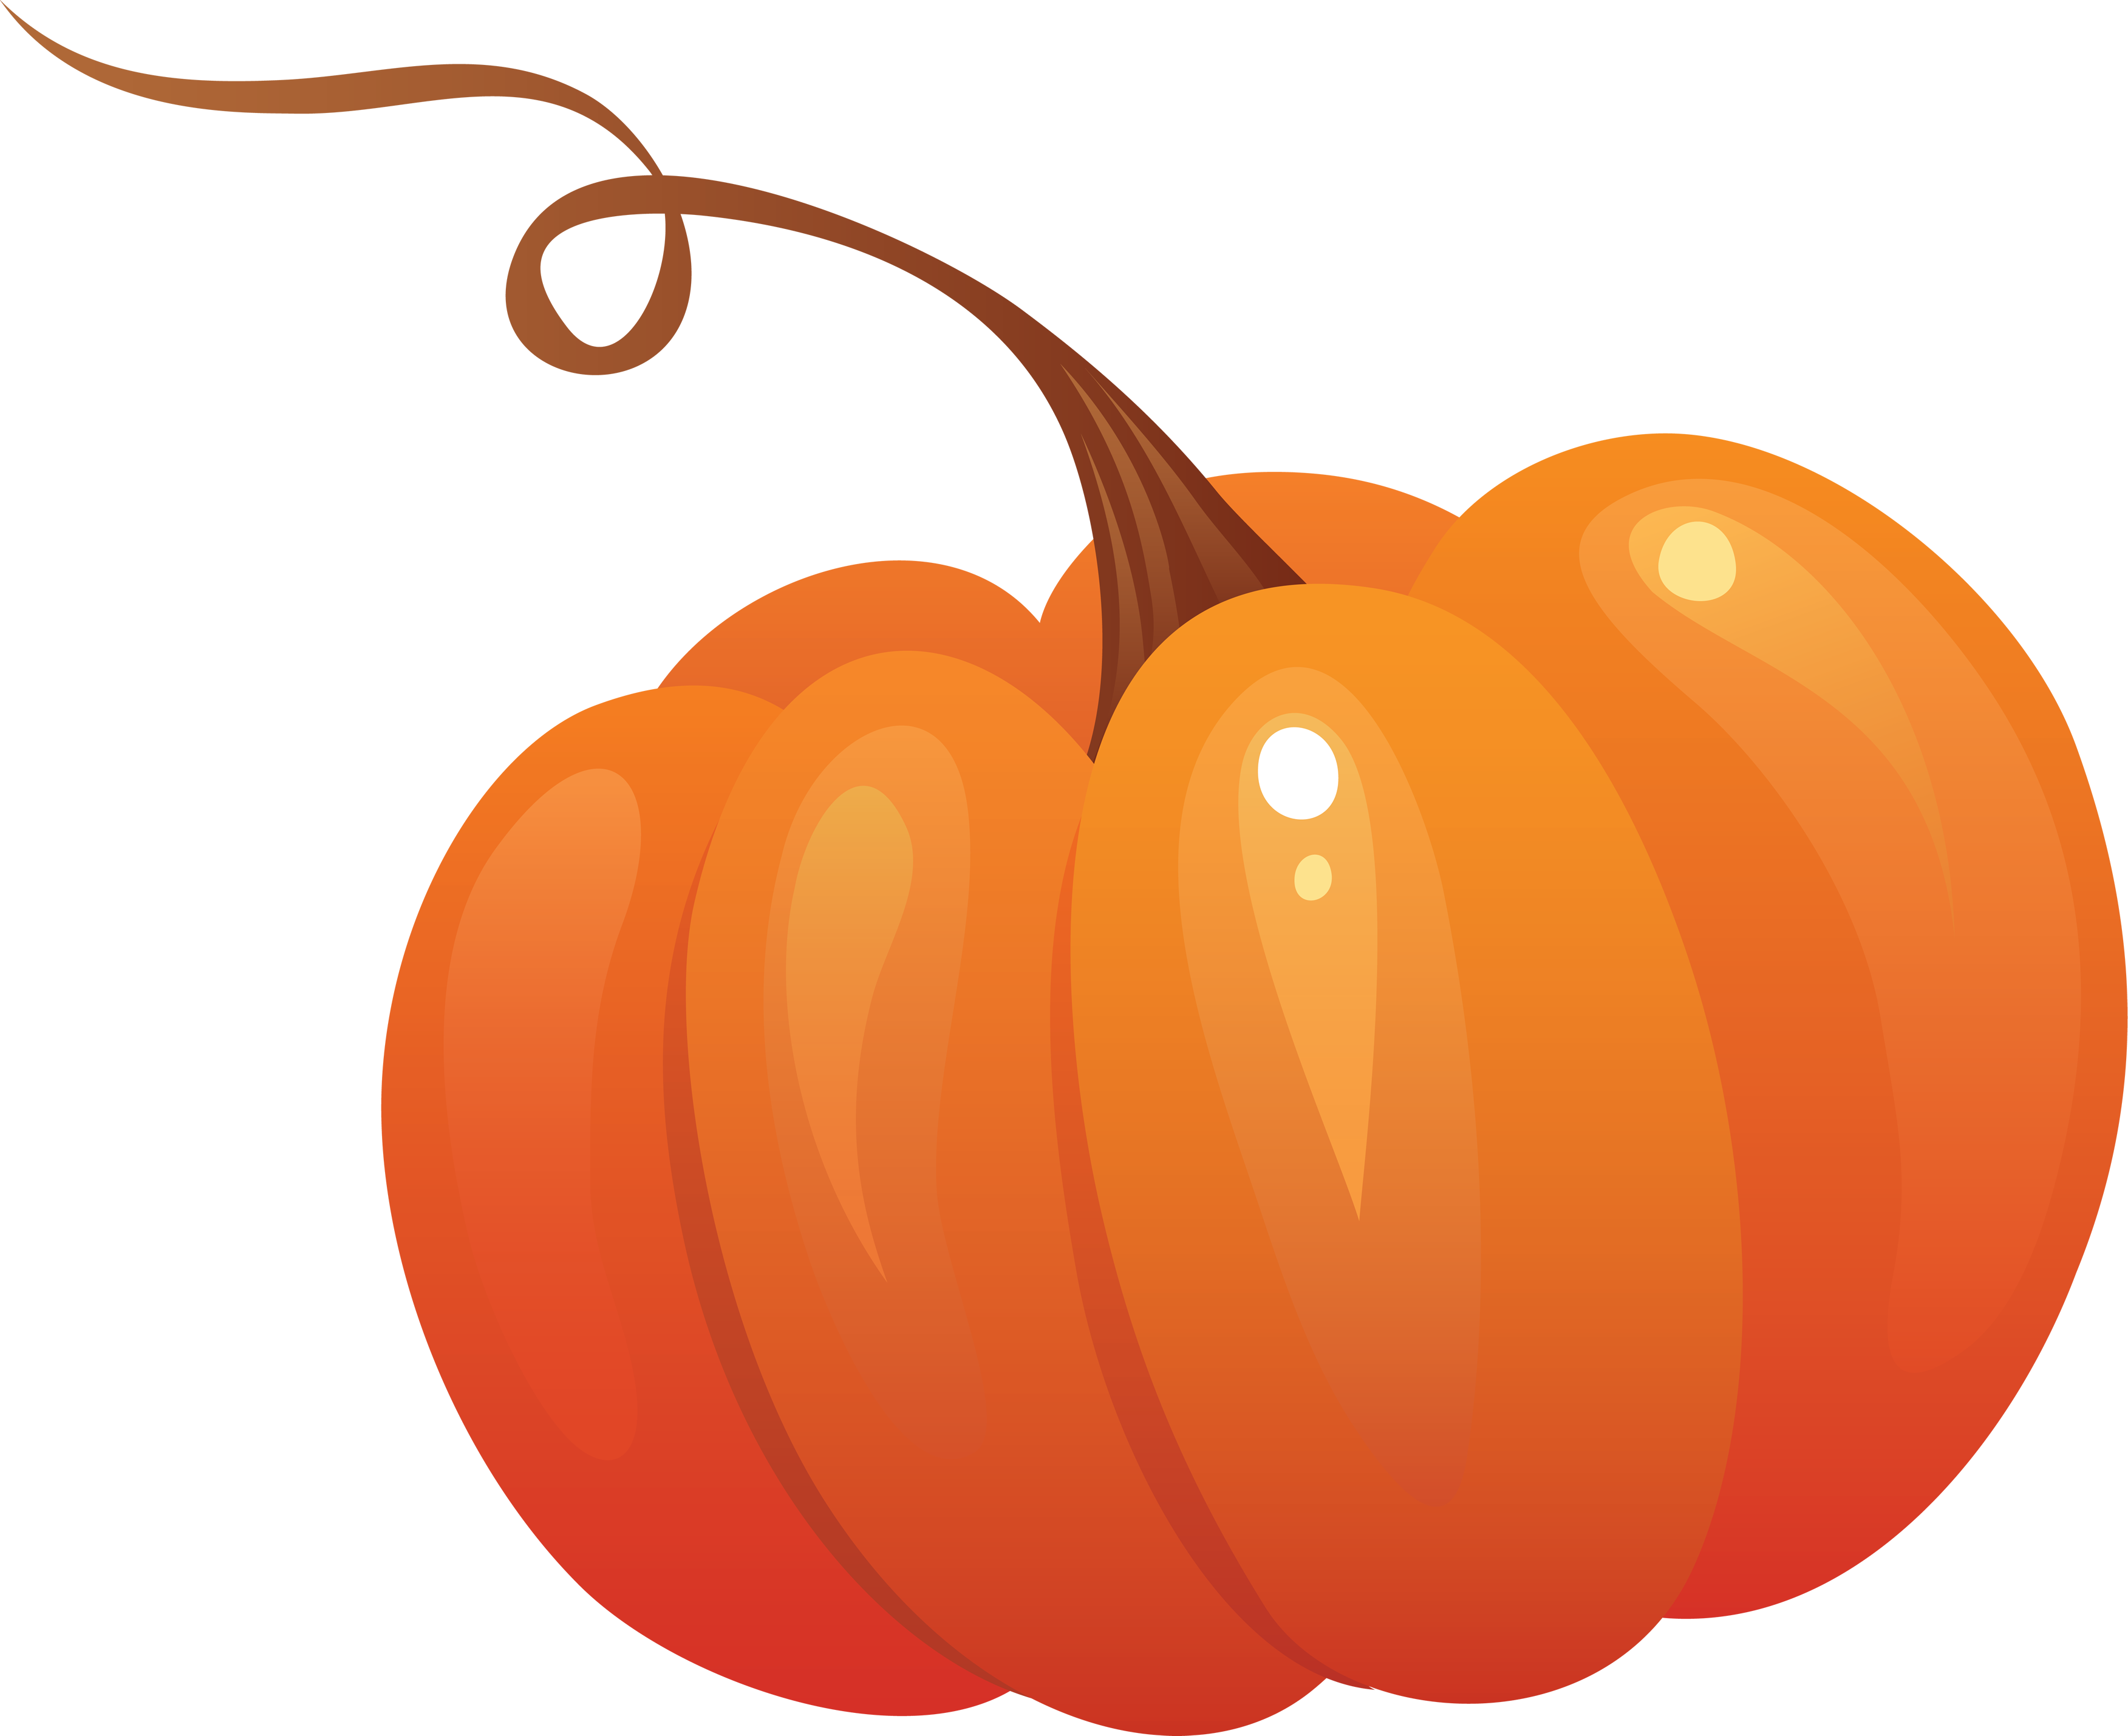 Pumpkin PNG images free download.